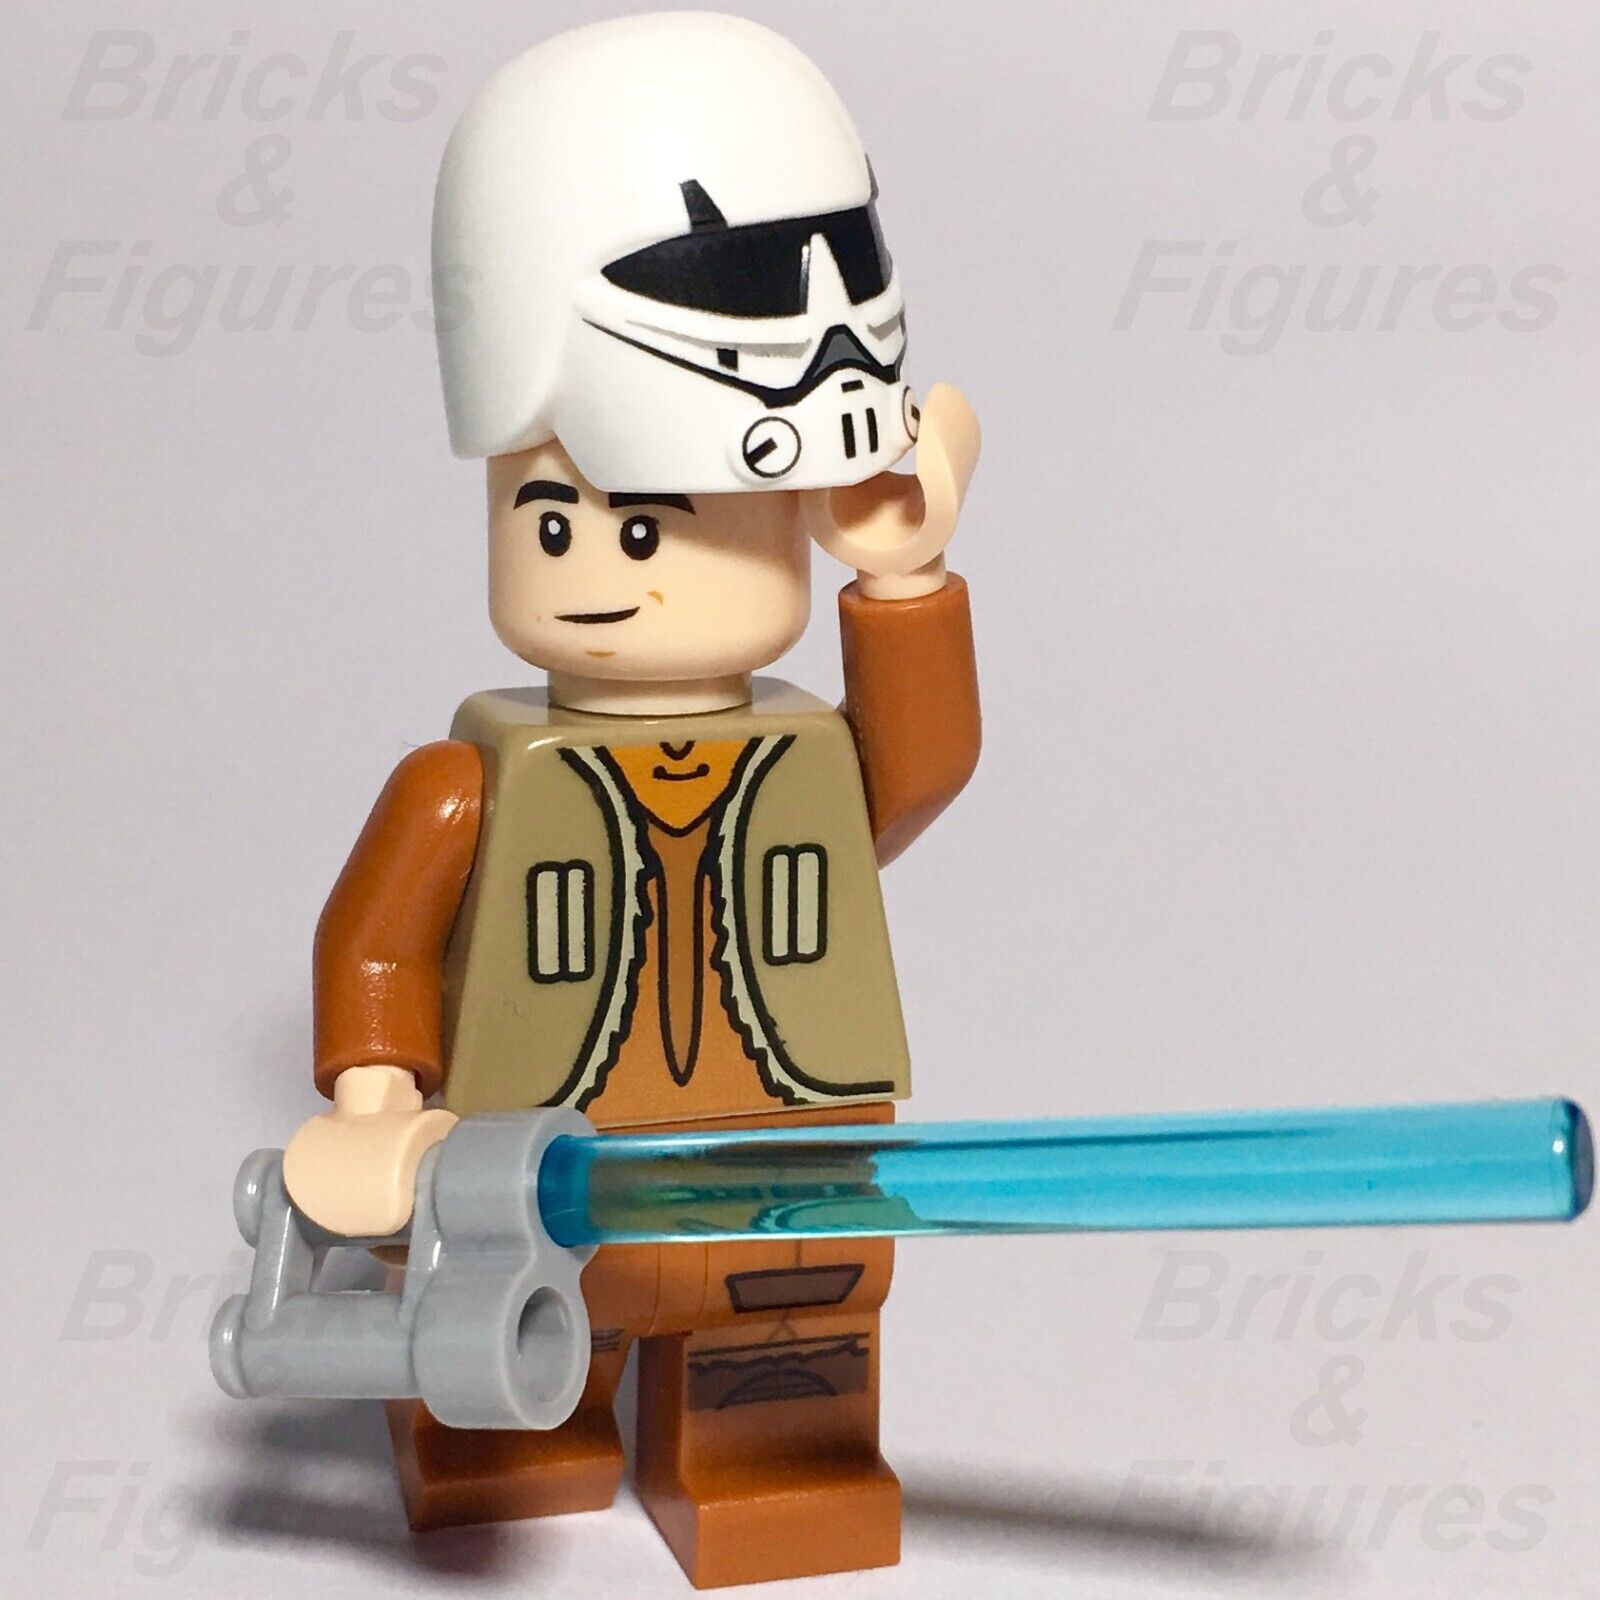 LEGO Star Wars Ezra Bridger Minifigure with Helmet Rebels 75048 sw0574a Rare